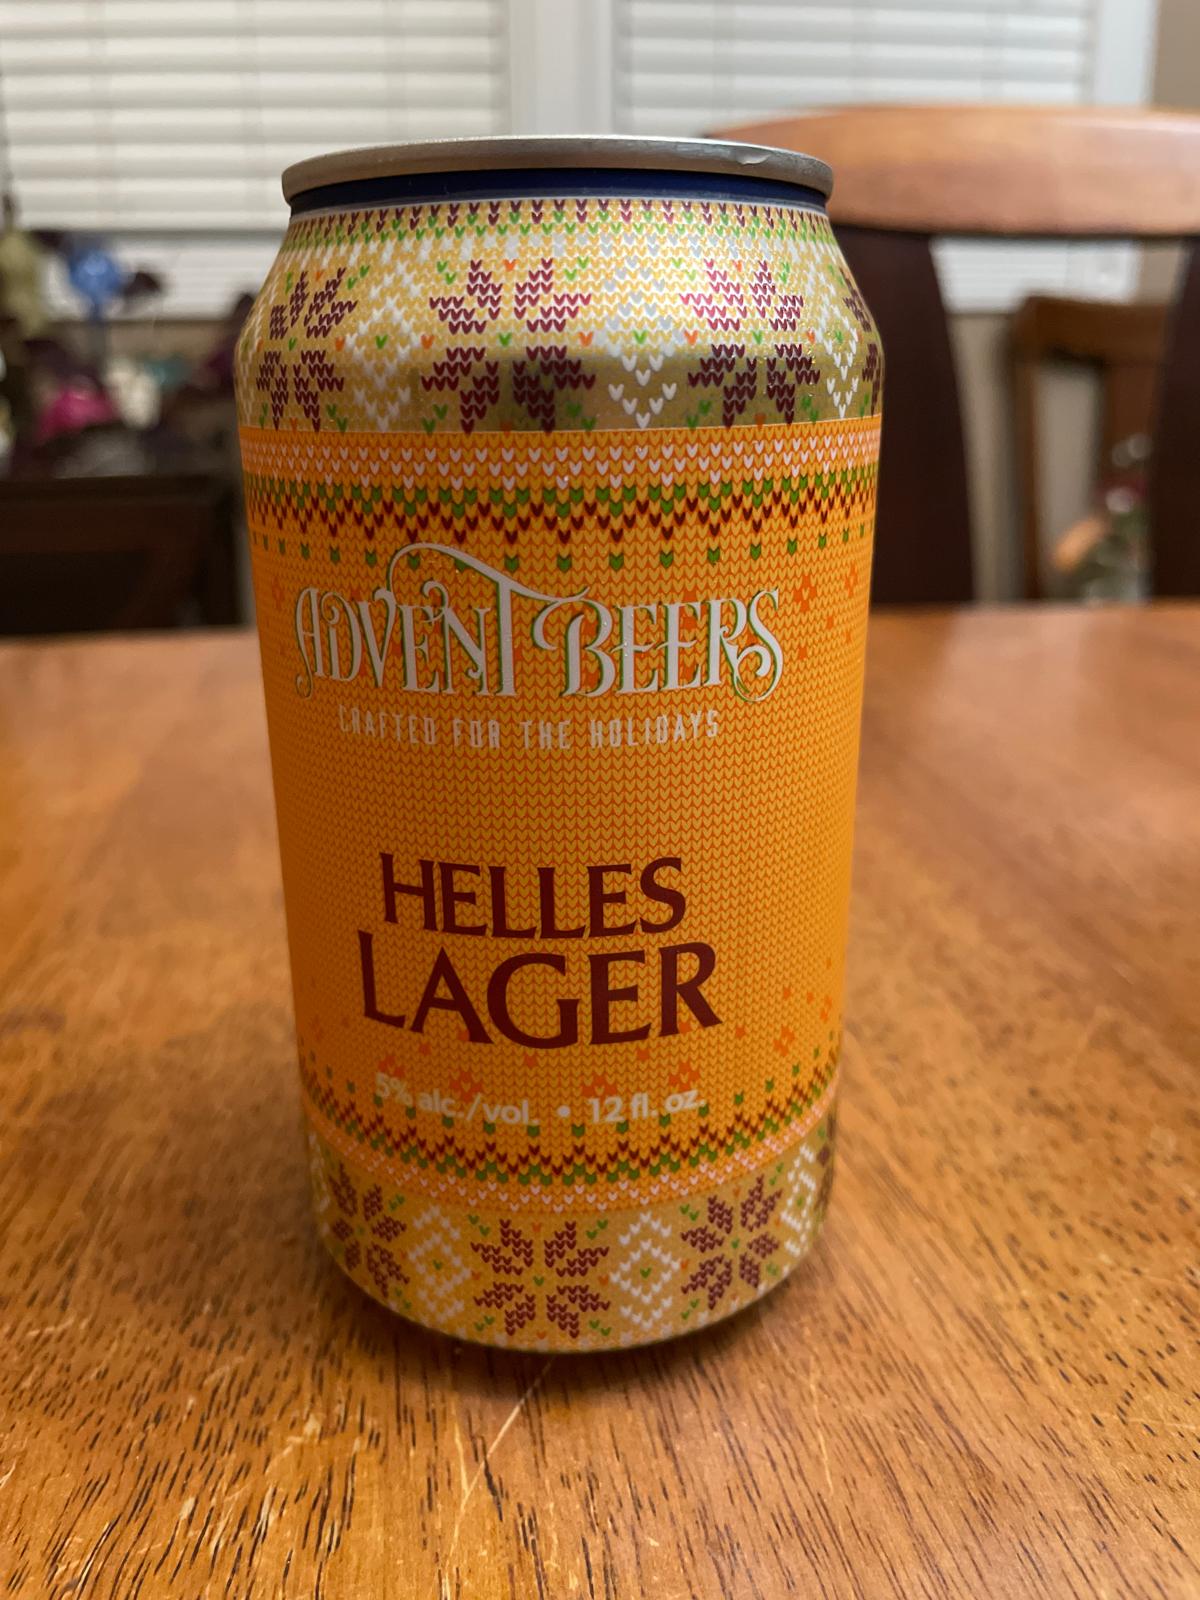 Advent Beers Helles Lager